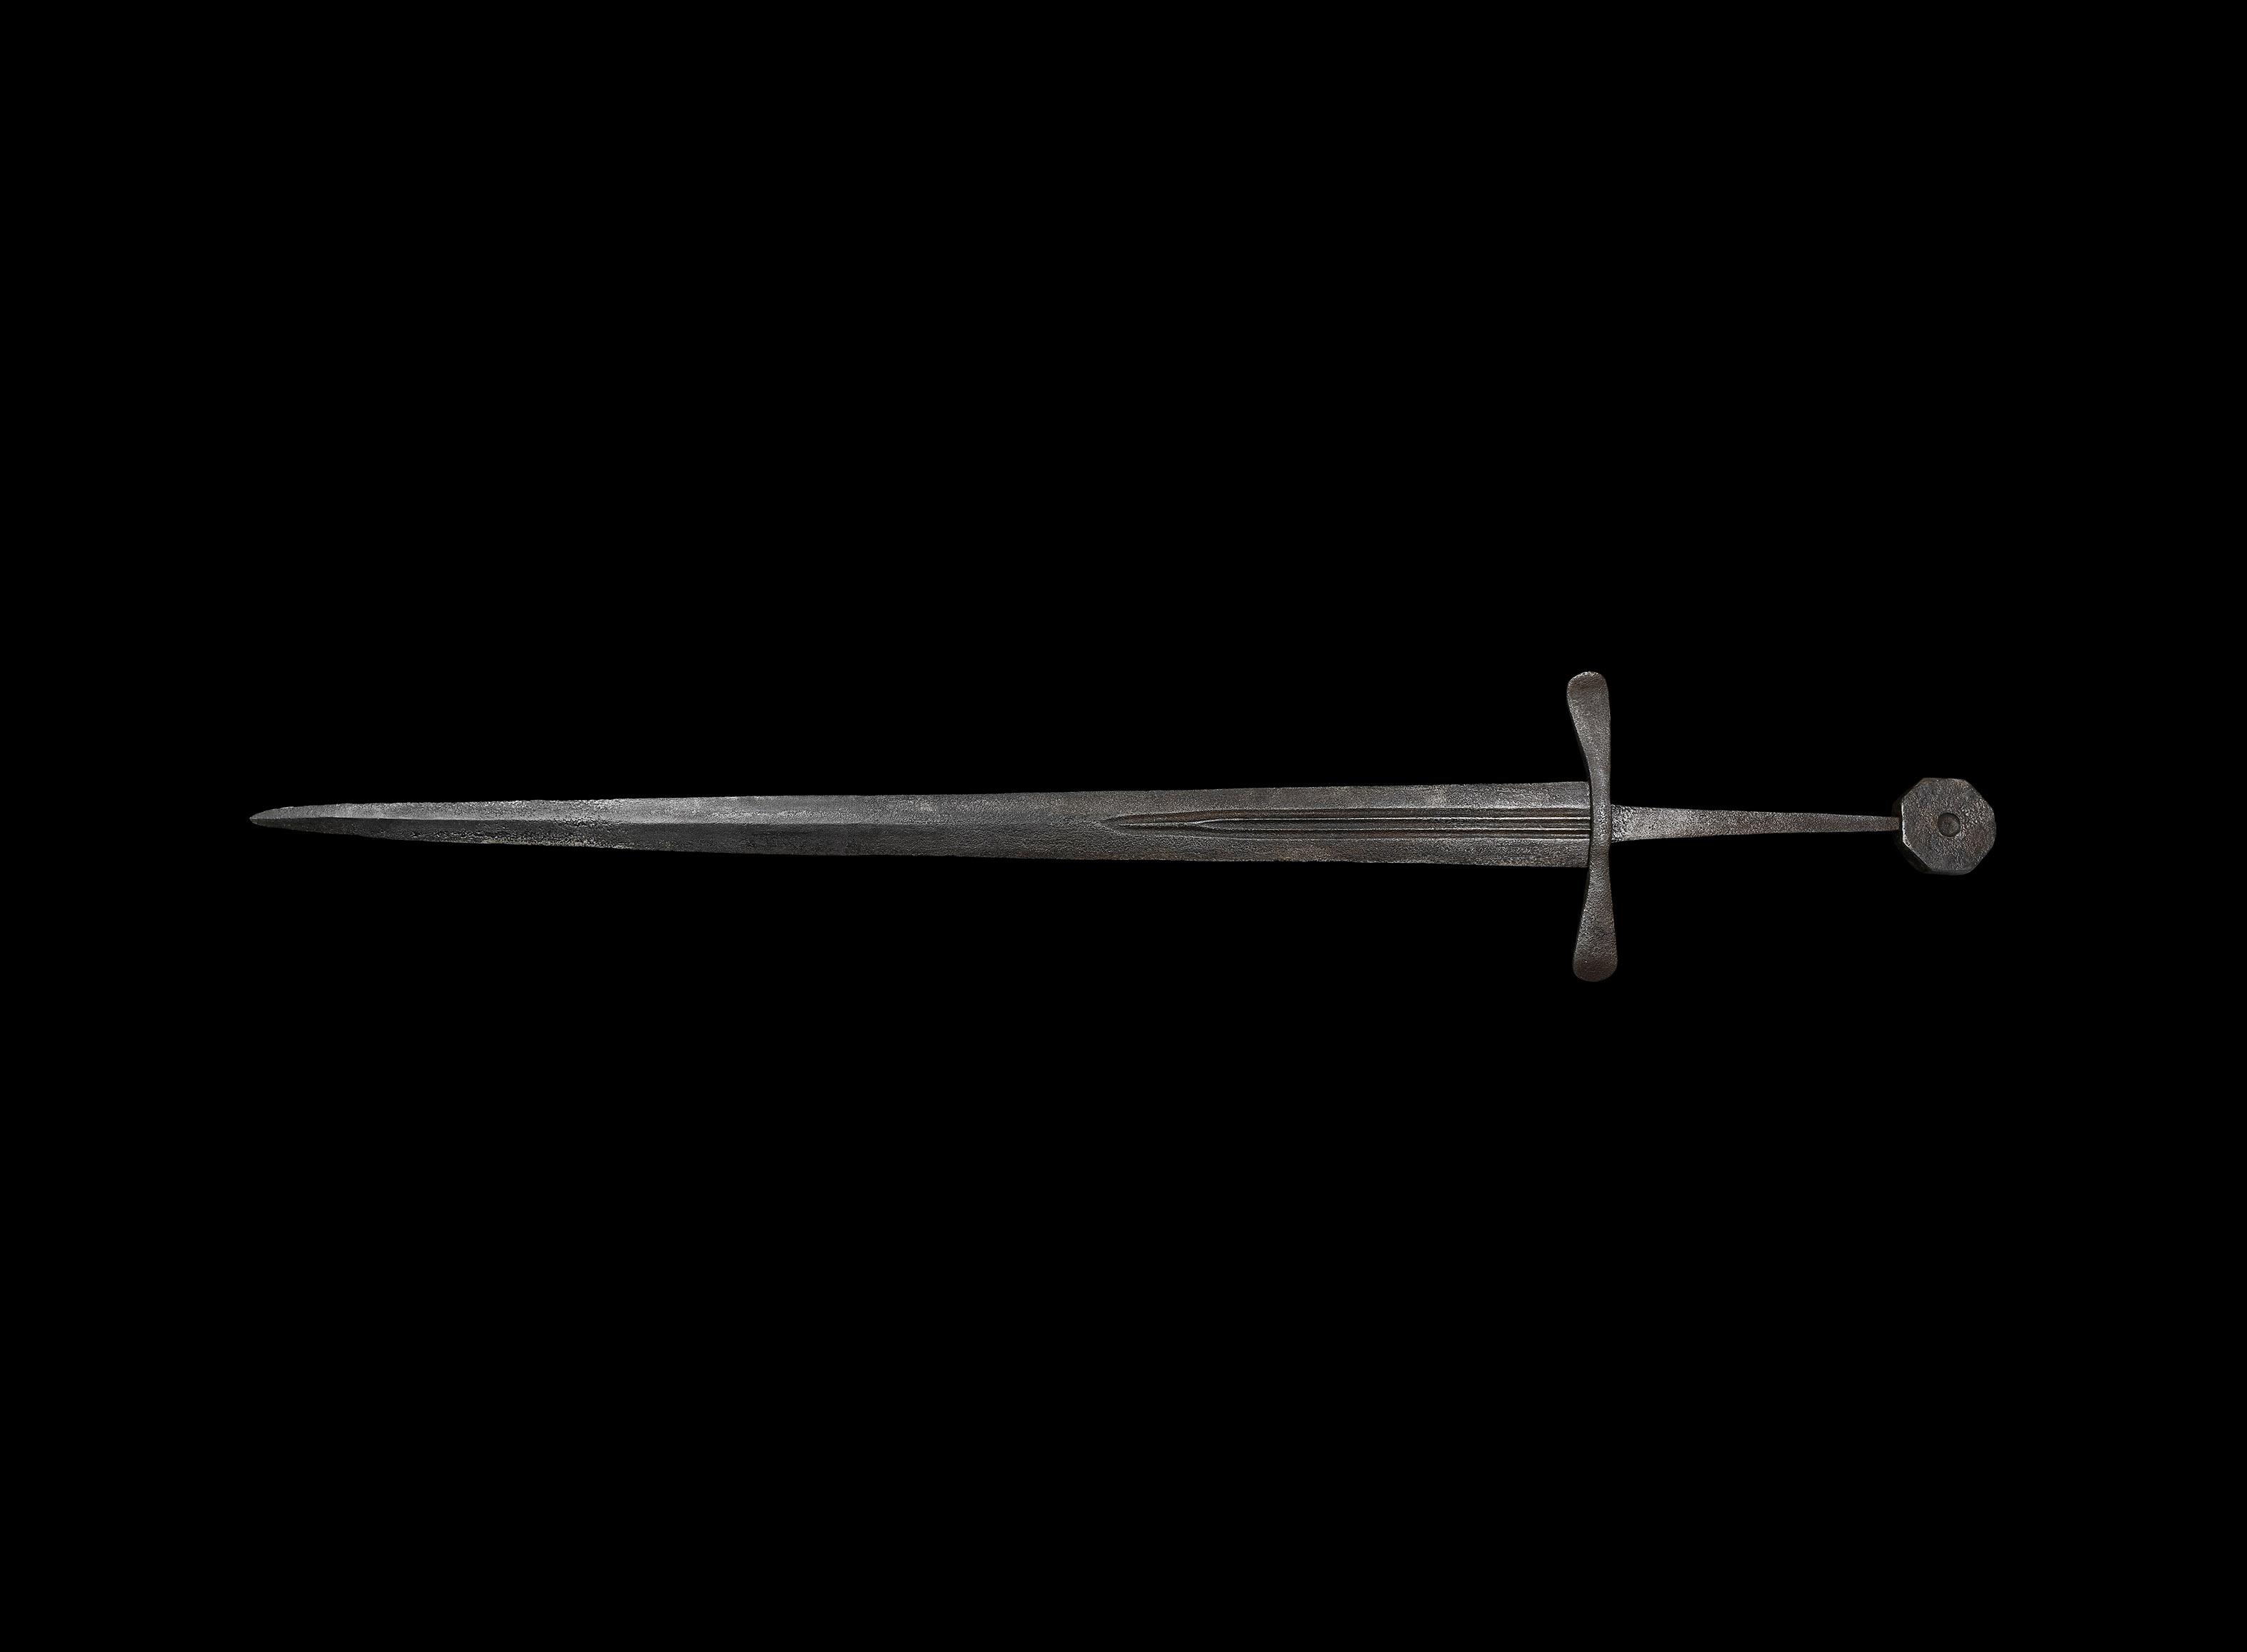 skyrim medieval weapons mod